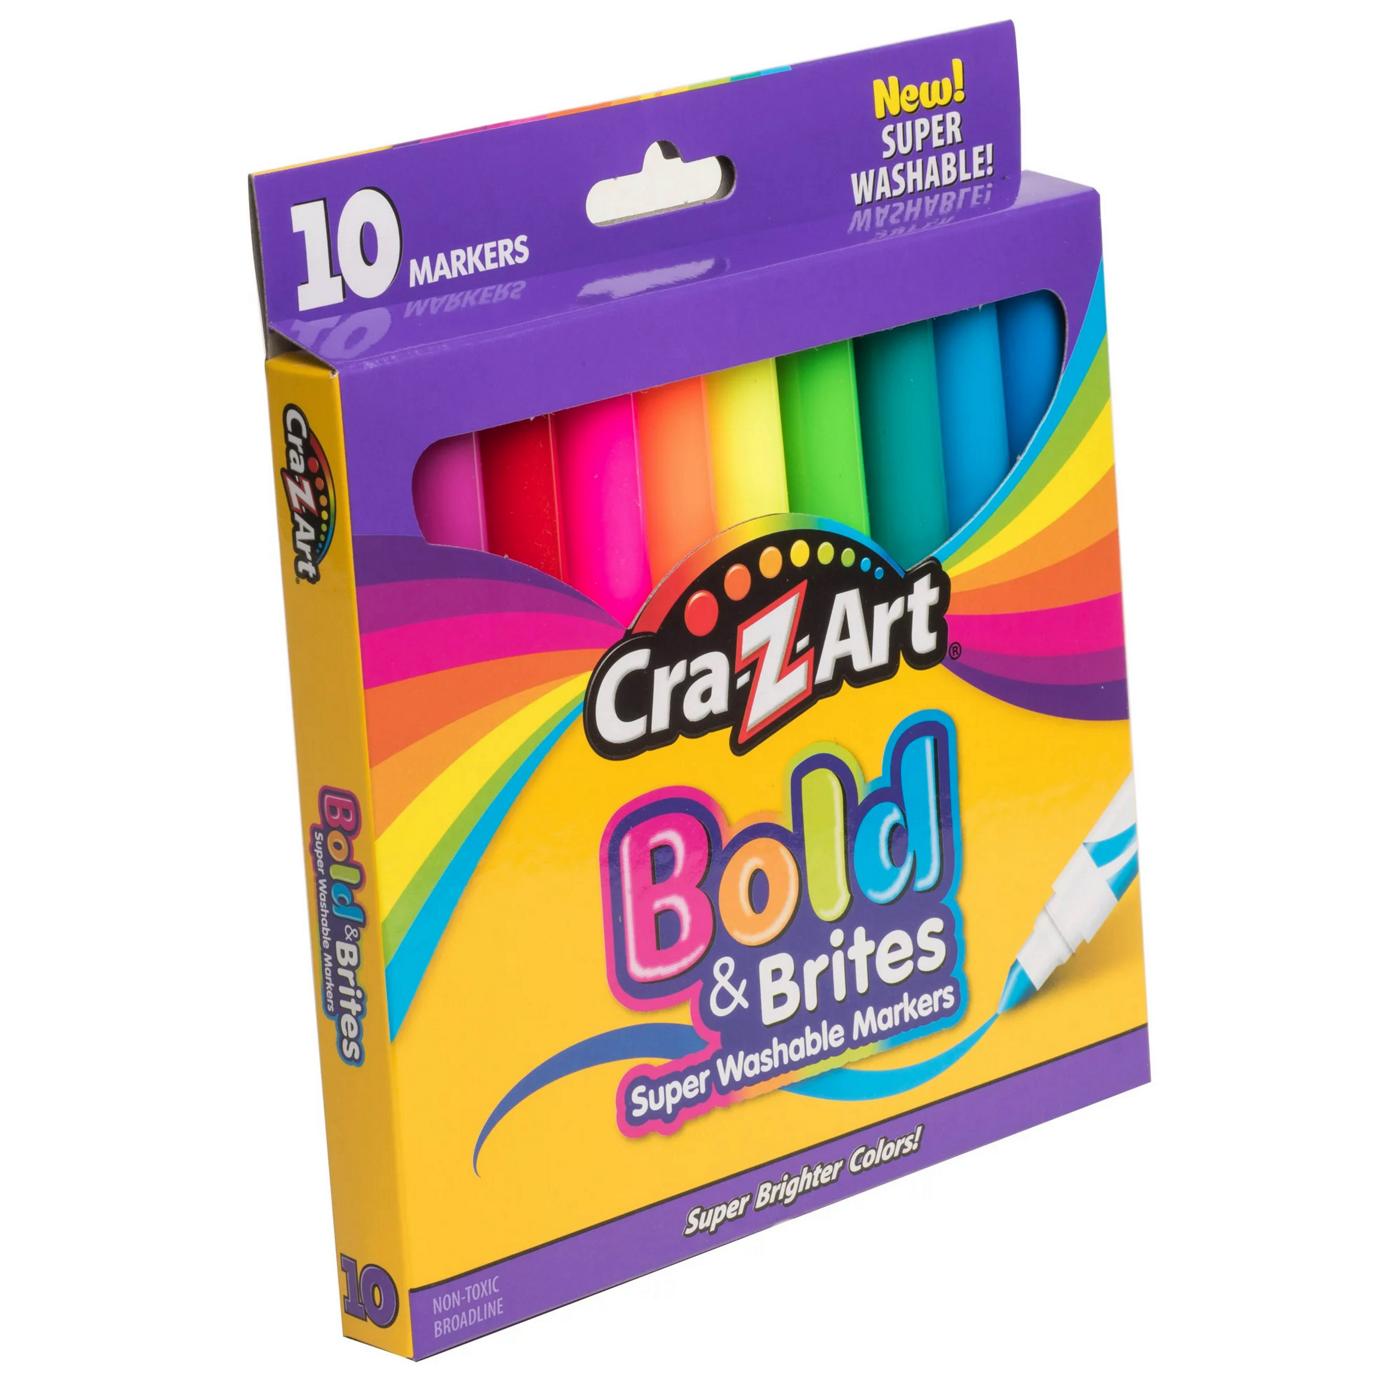 Cra-Z-Art Bold & Brites Super Washable Markers; image 4 of 5